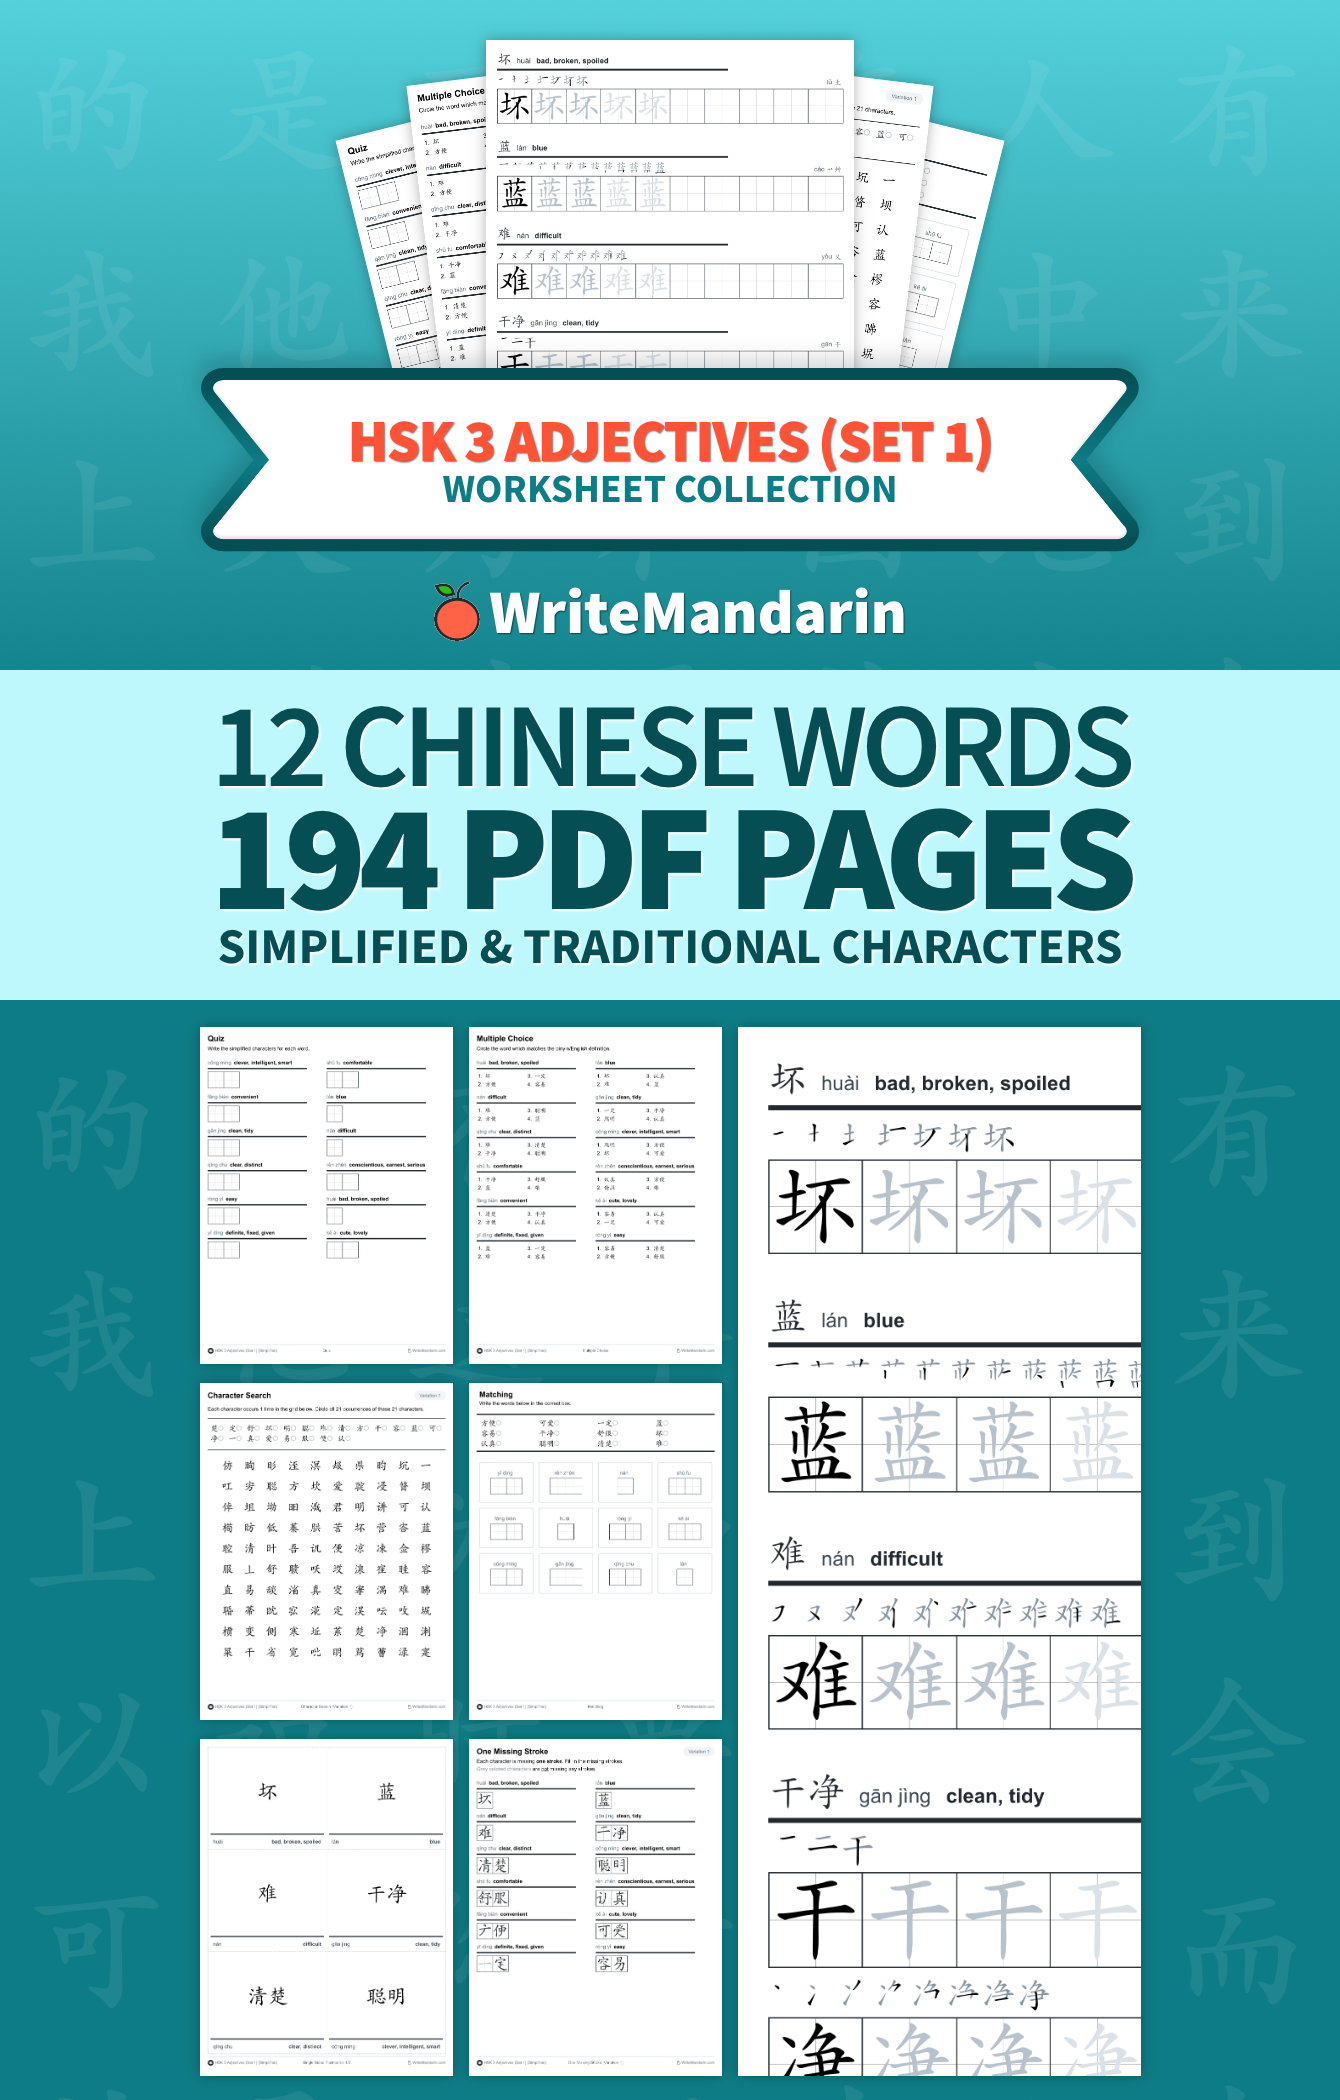 Preview image of HSK 3 Adjectives (Set 1) worksheet collection